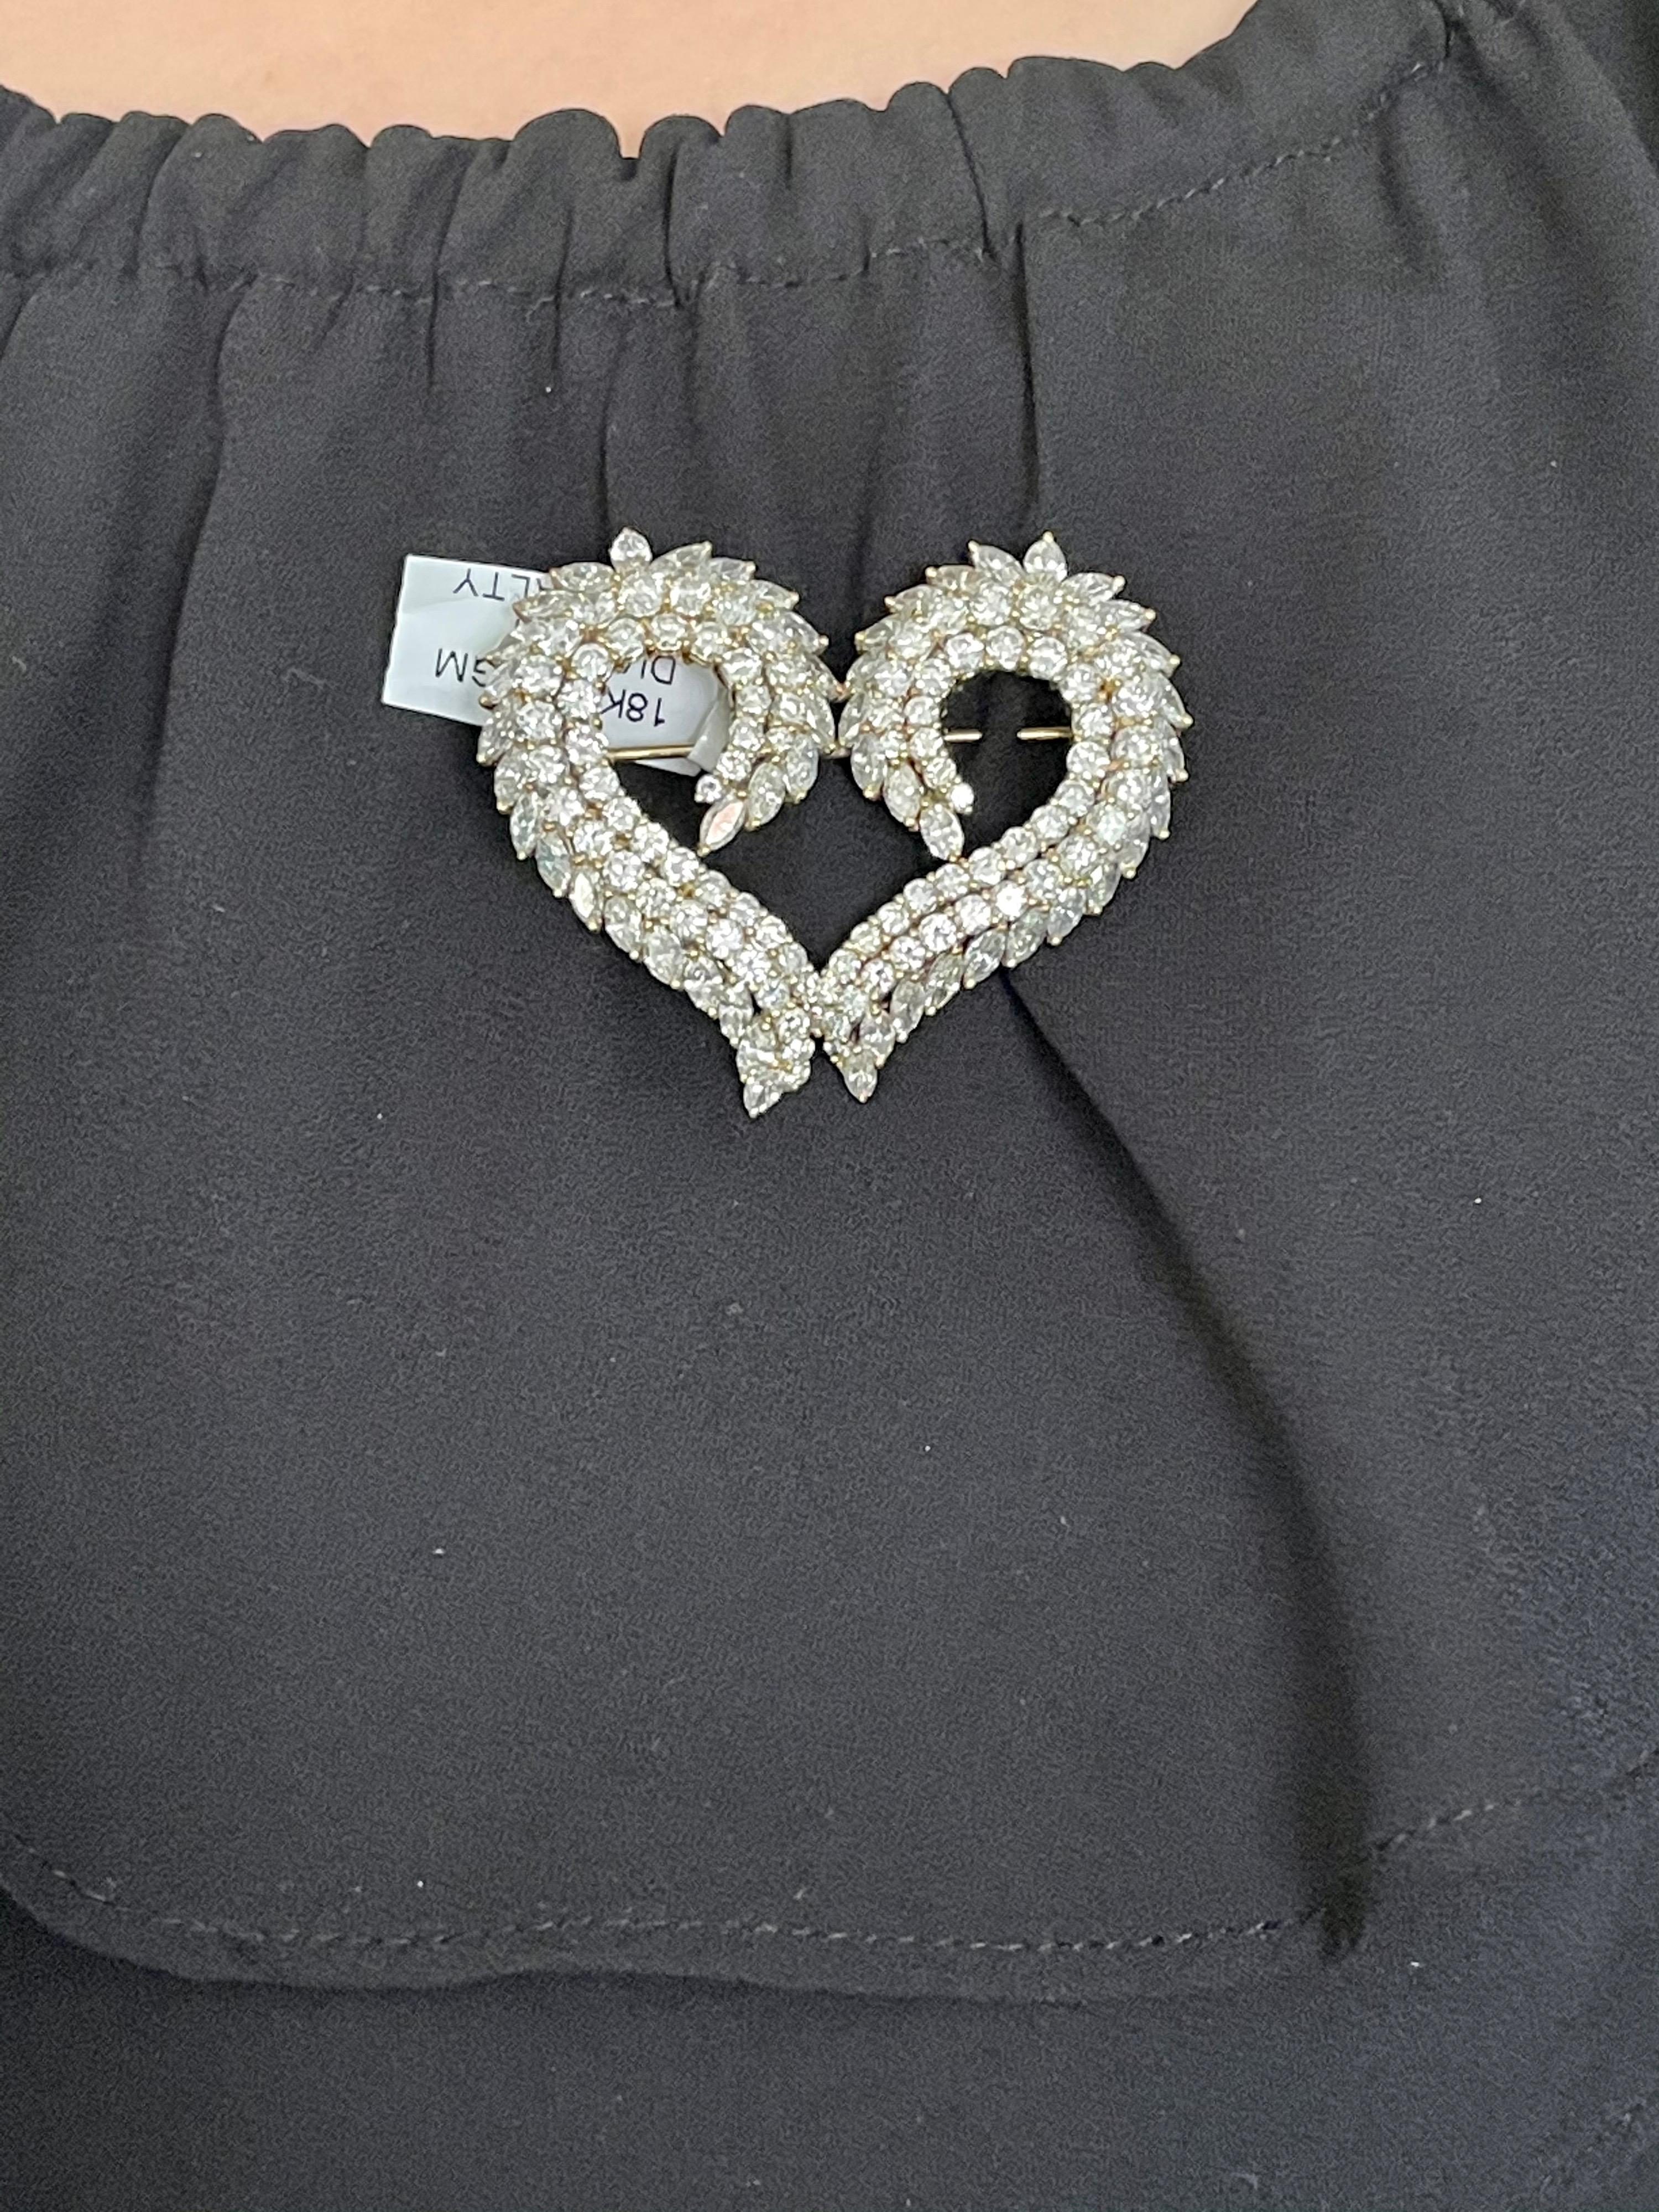 9.5 Carat Heart Shaped Diamond 18 Karat Gold Pin or Broach, VS Quality Estate 3